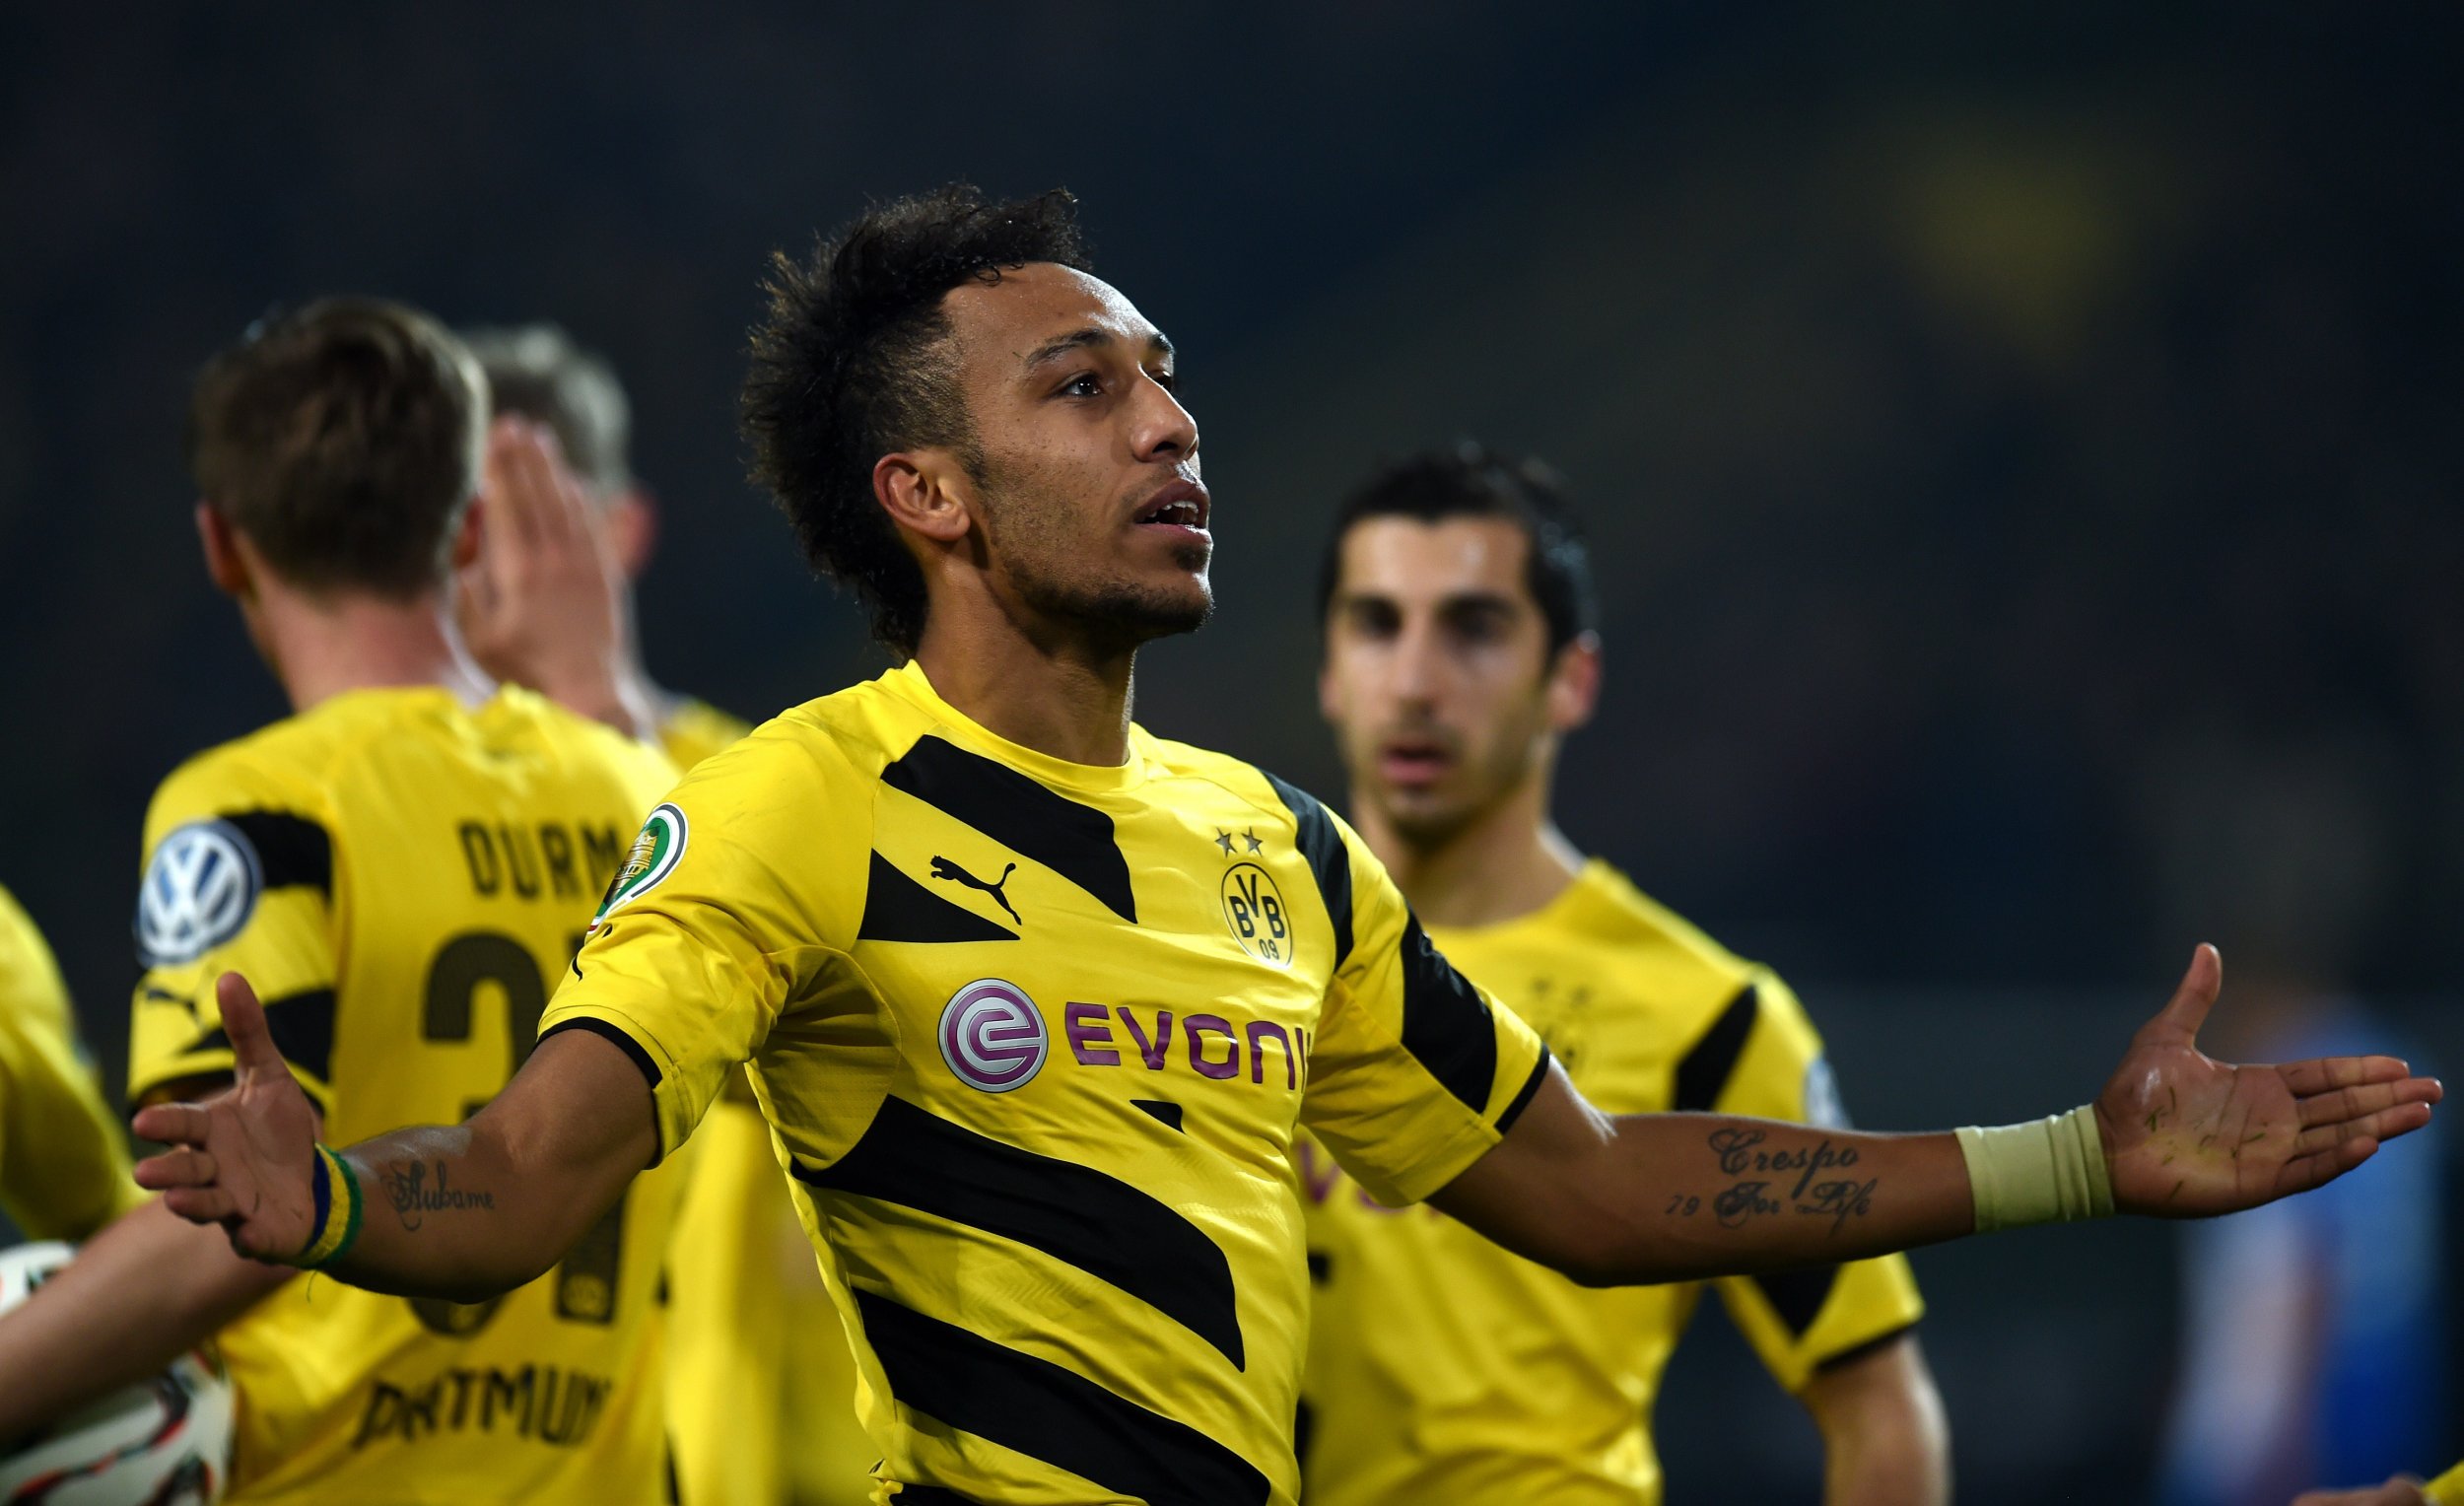 Pierre-Emerick Aubameyang has been Borussia Dortmund's star player this season.